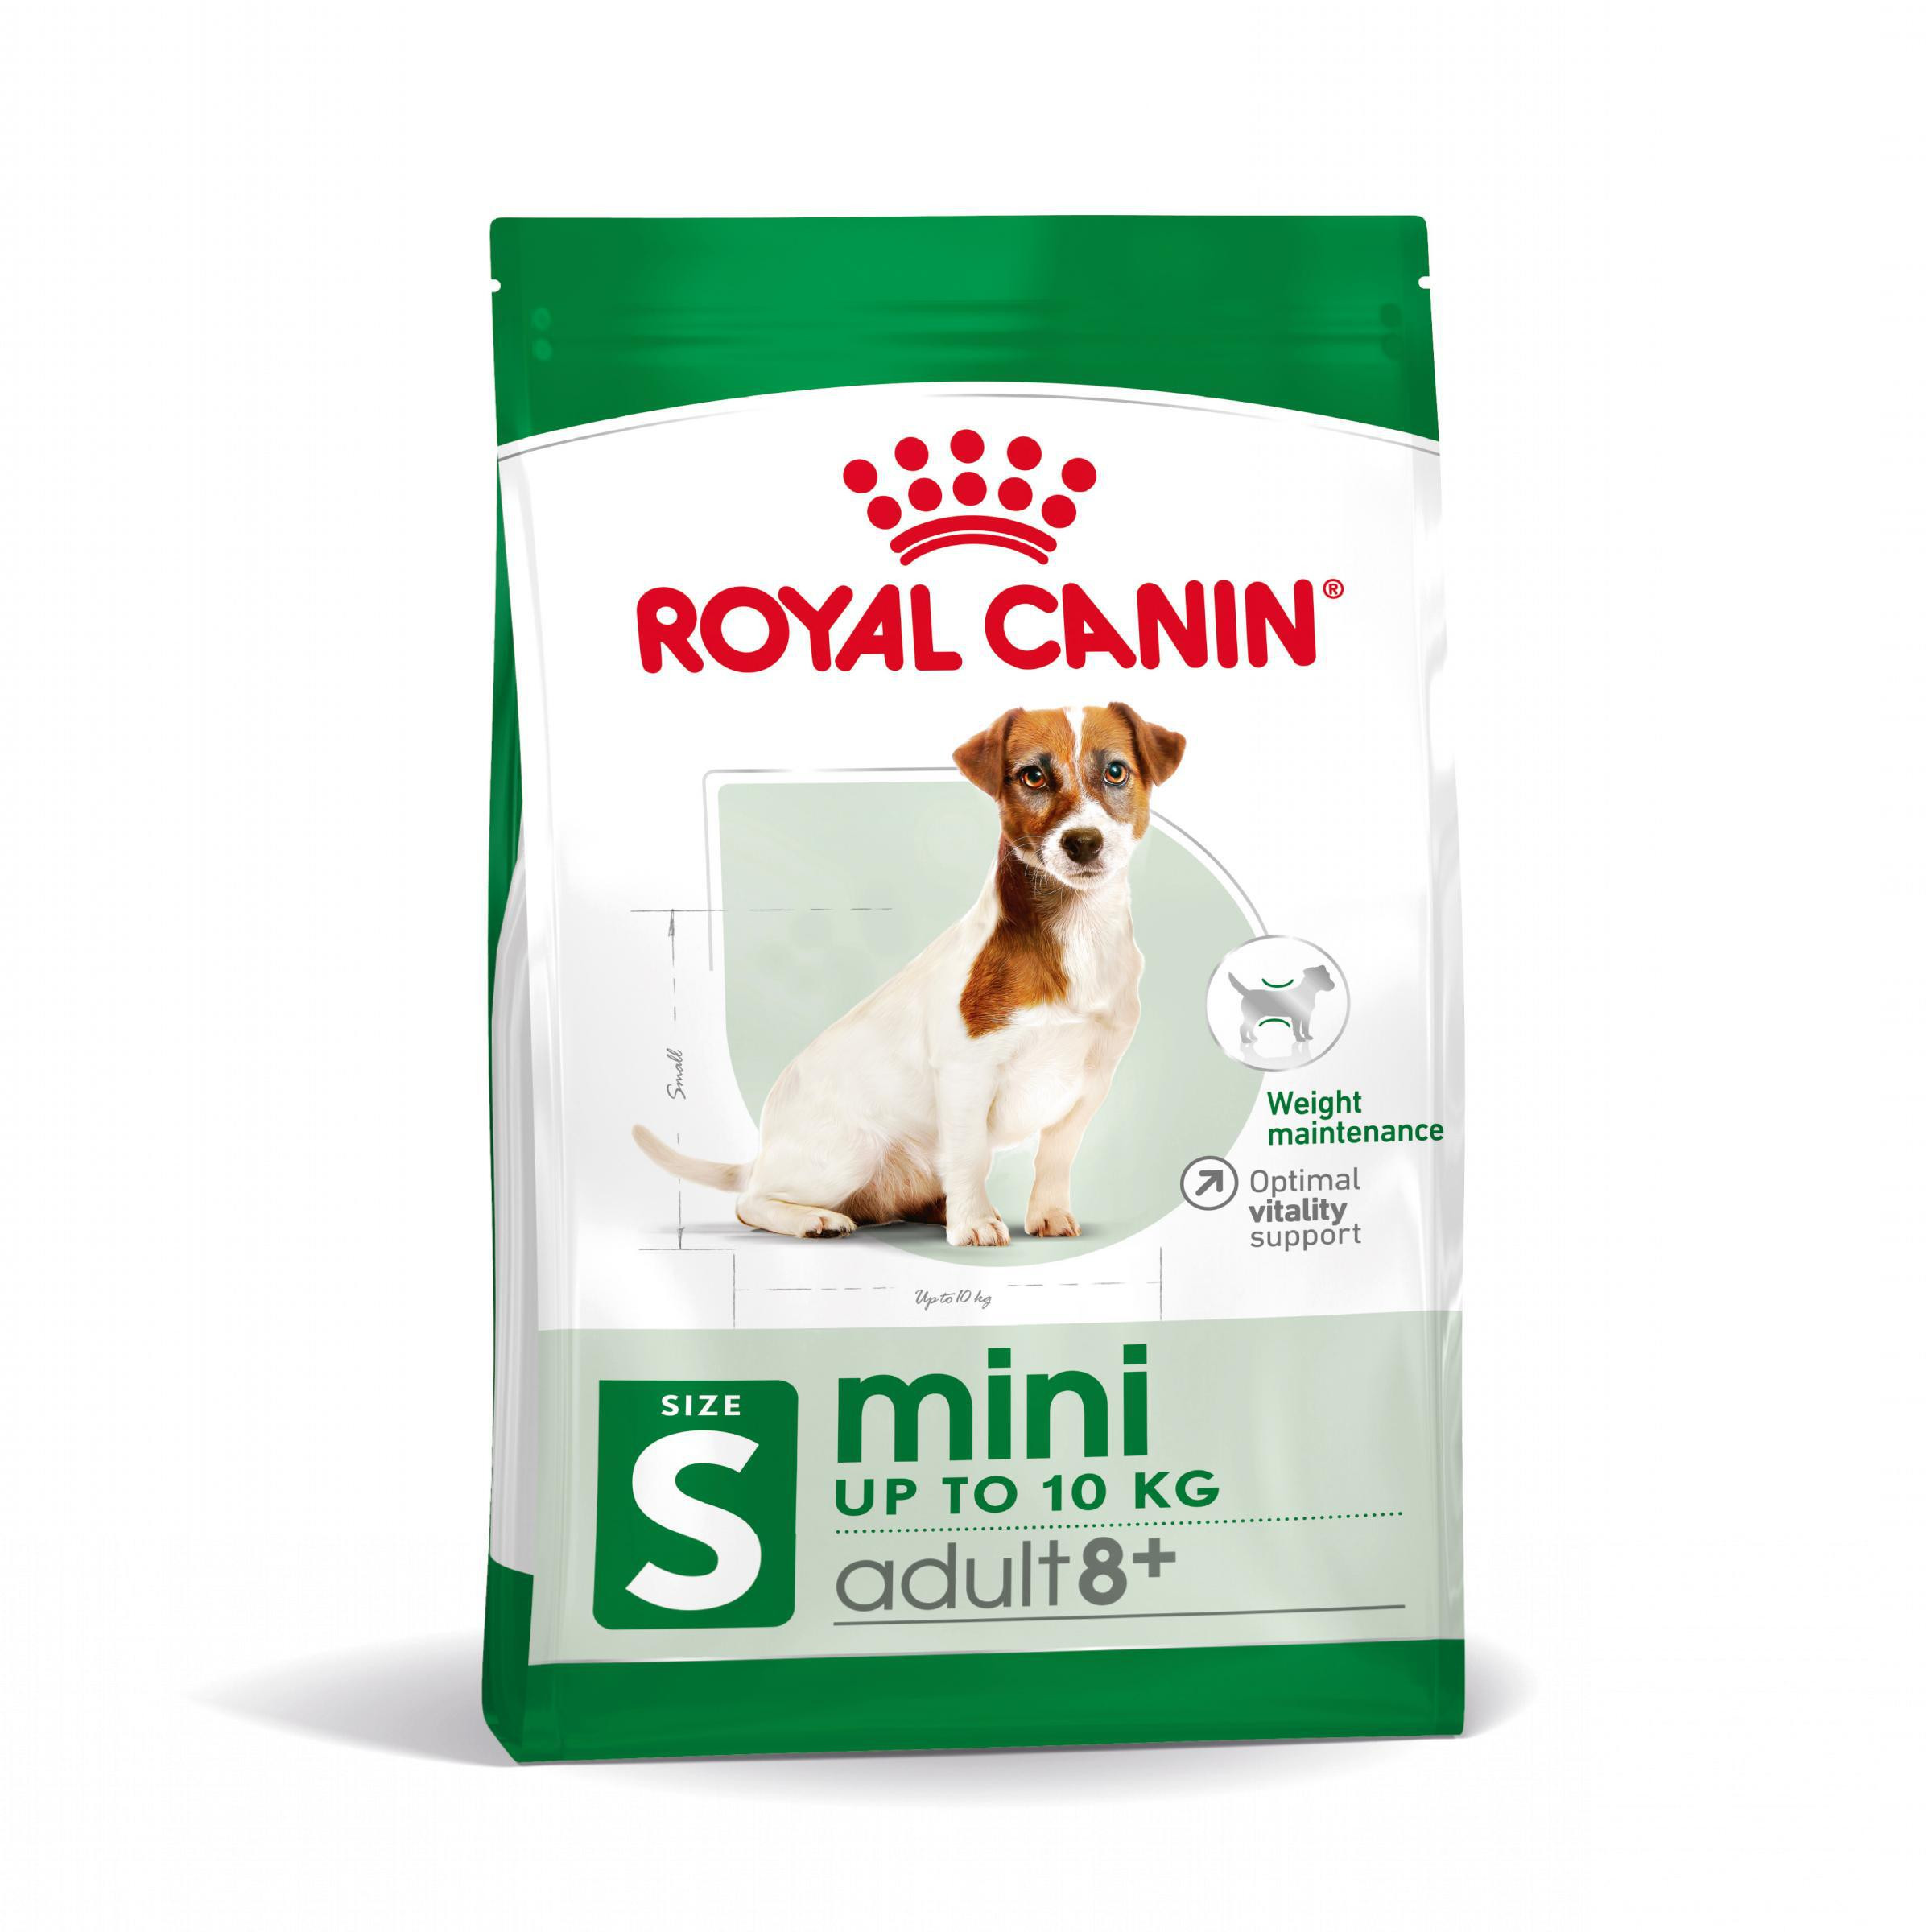 Royal Canin Mini Adult 8+ Cane